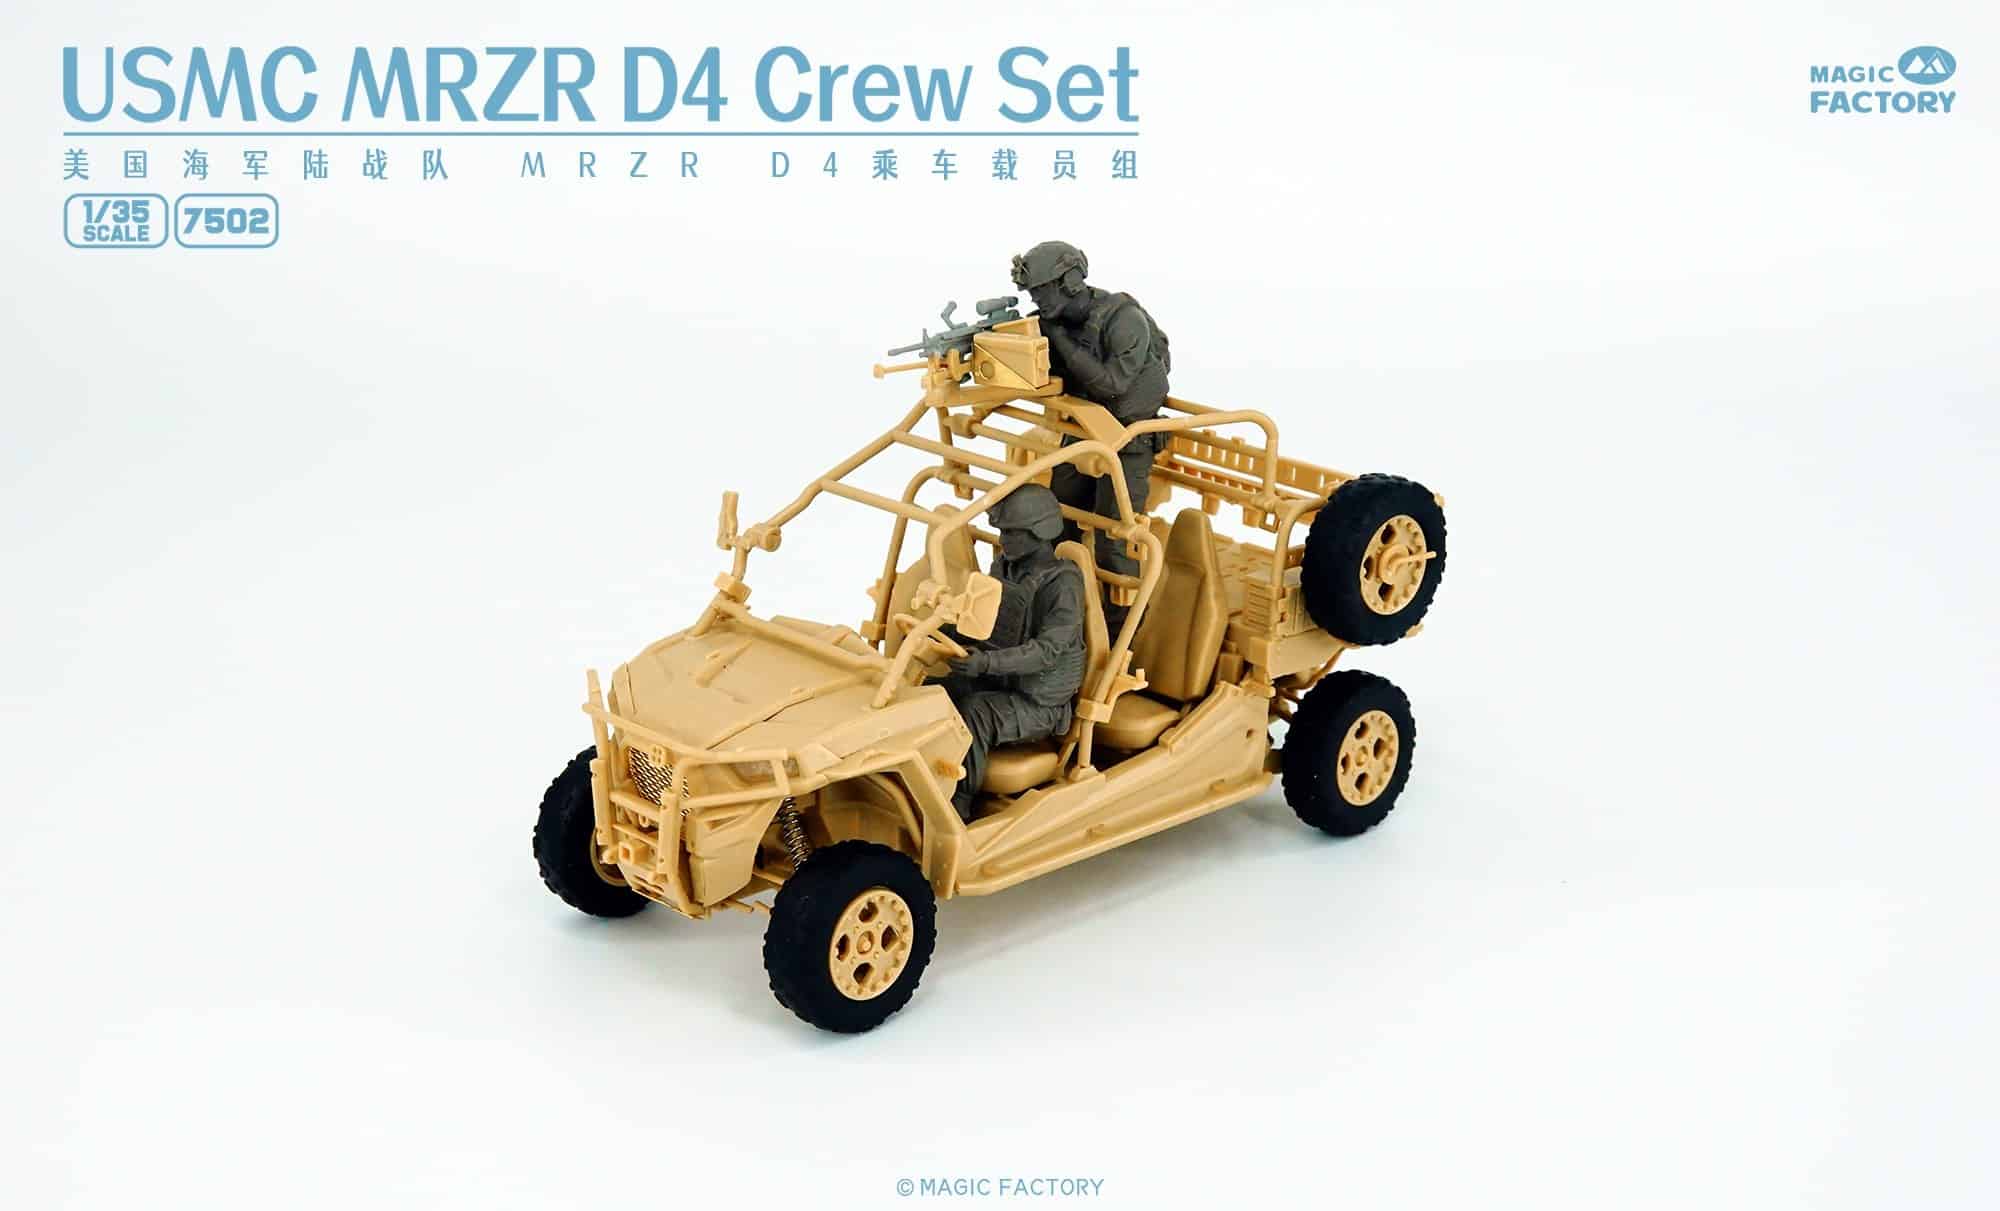 New USMC MRZR D4 Crew Set Available from Magic Factory-2